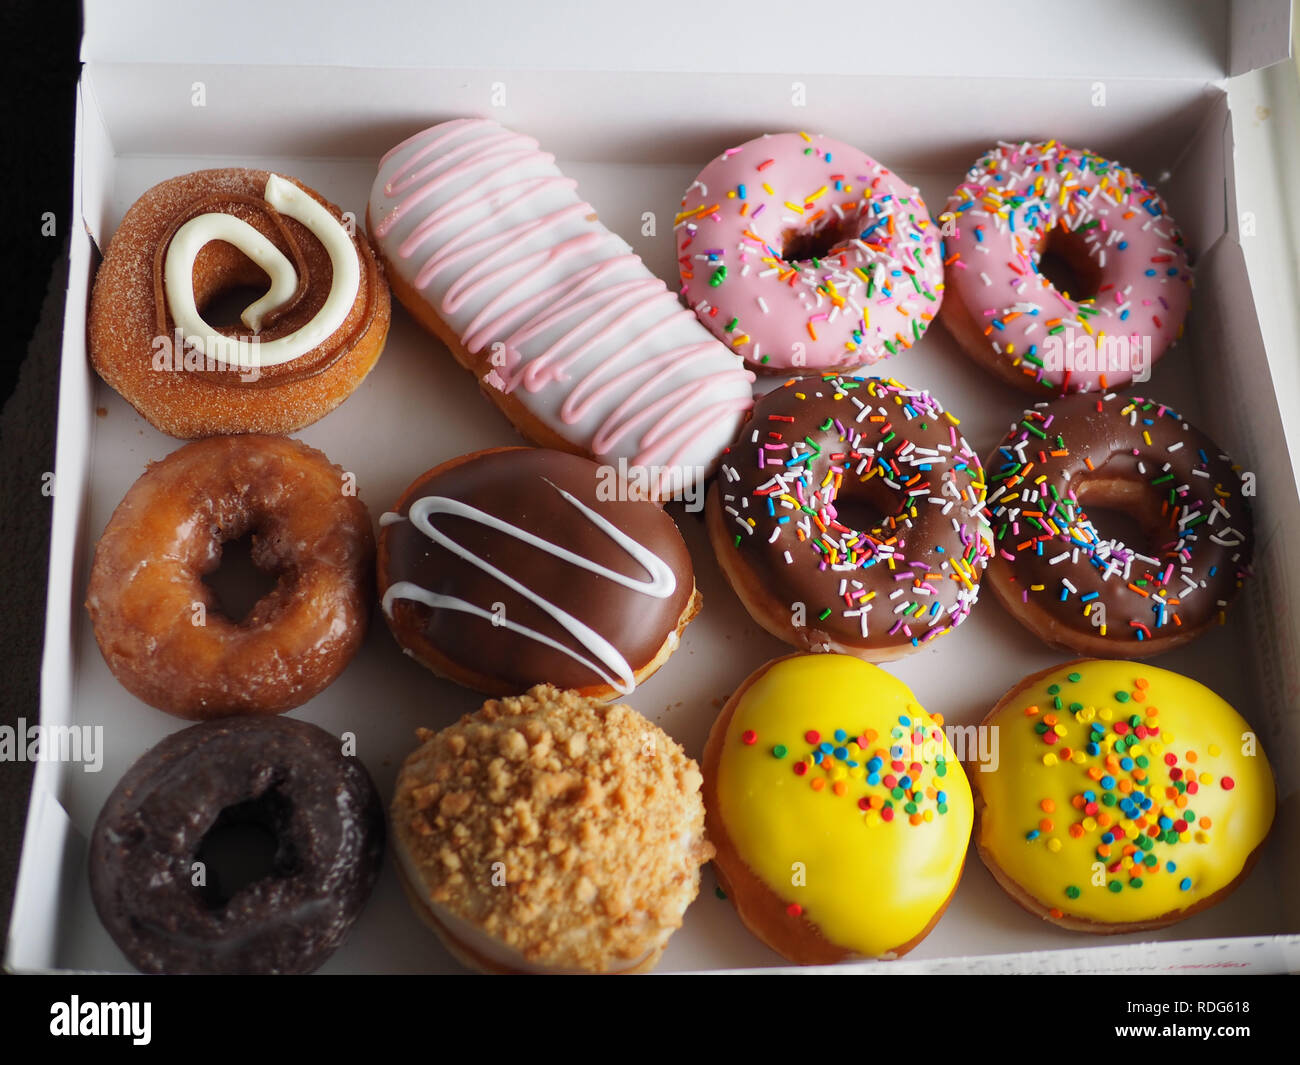 A dozen of colorful doughnuts from Krispy Kreme Stock Photo